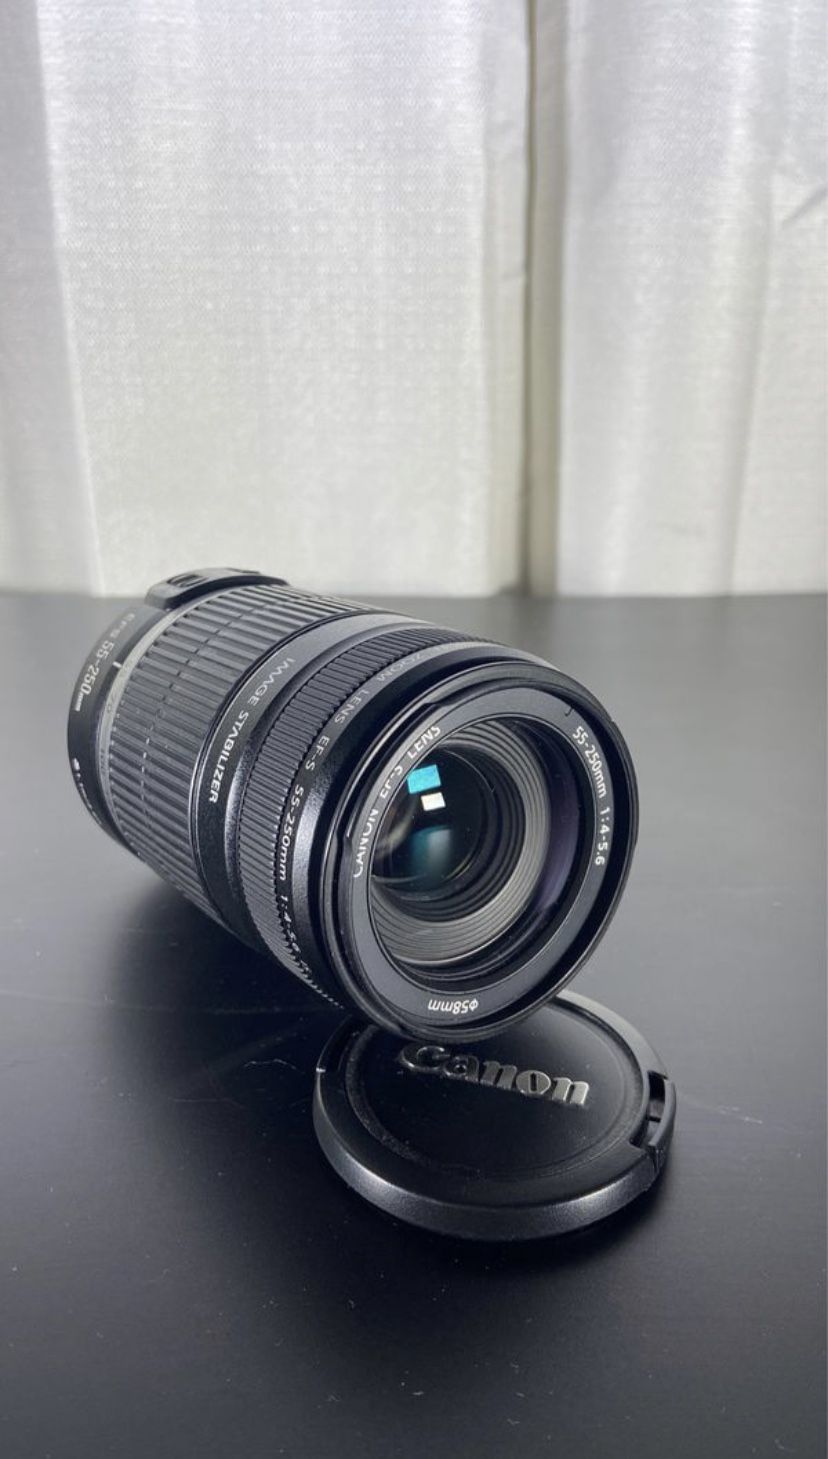 Canon dlsr lens 55-250mm 1:4-5.6